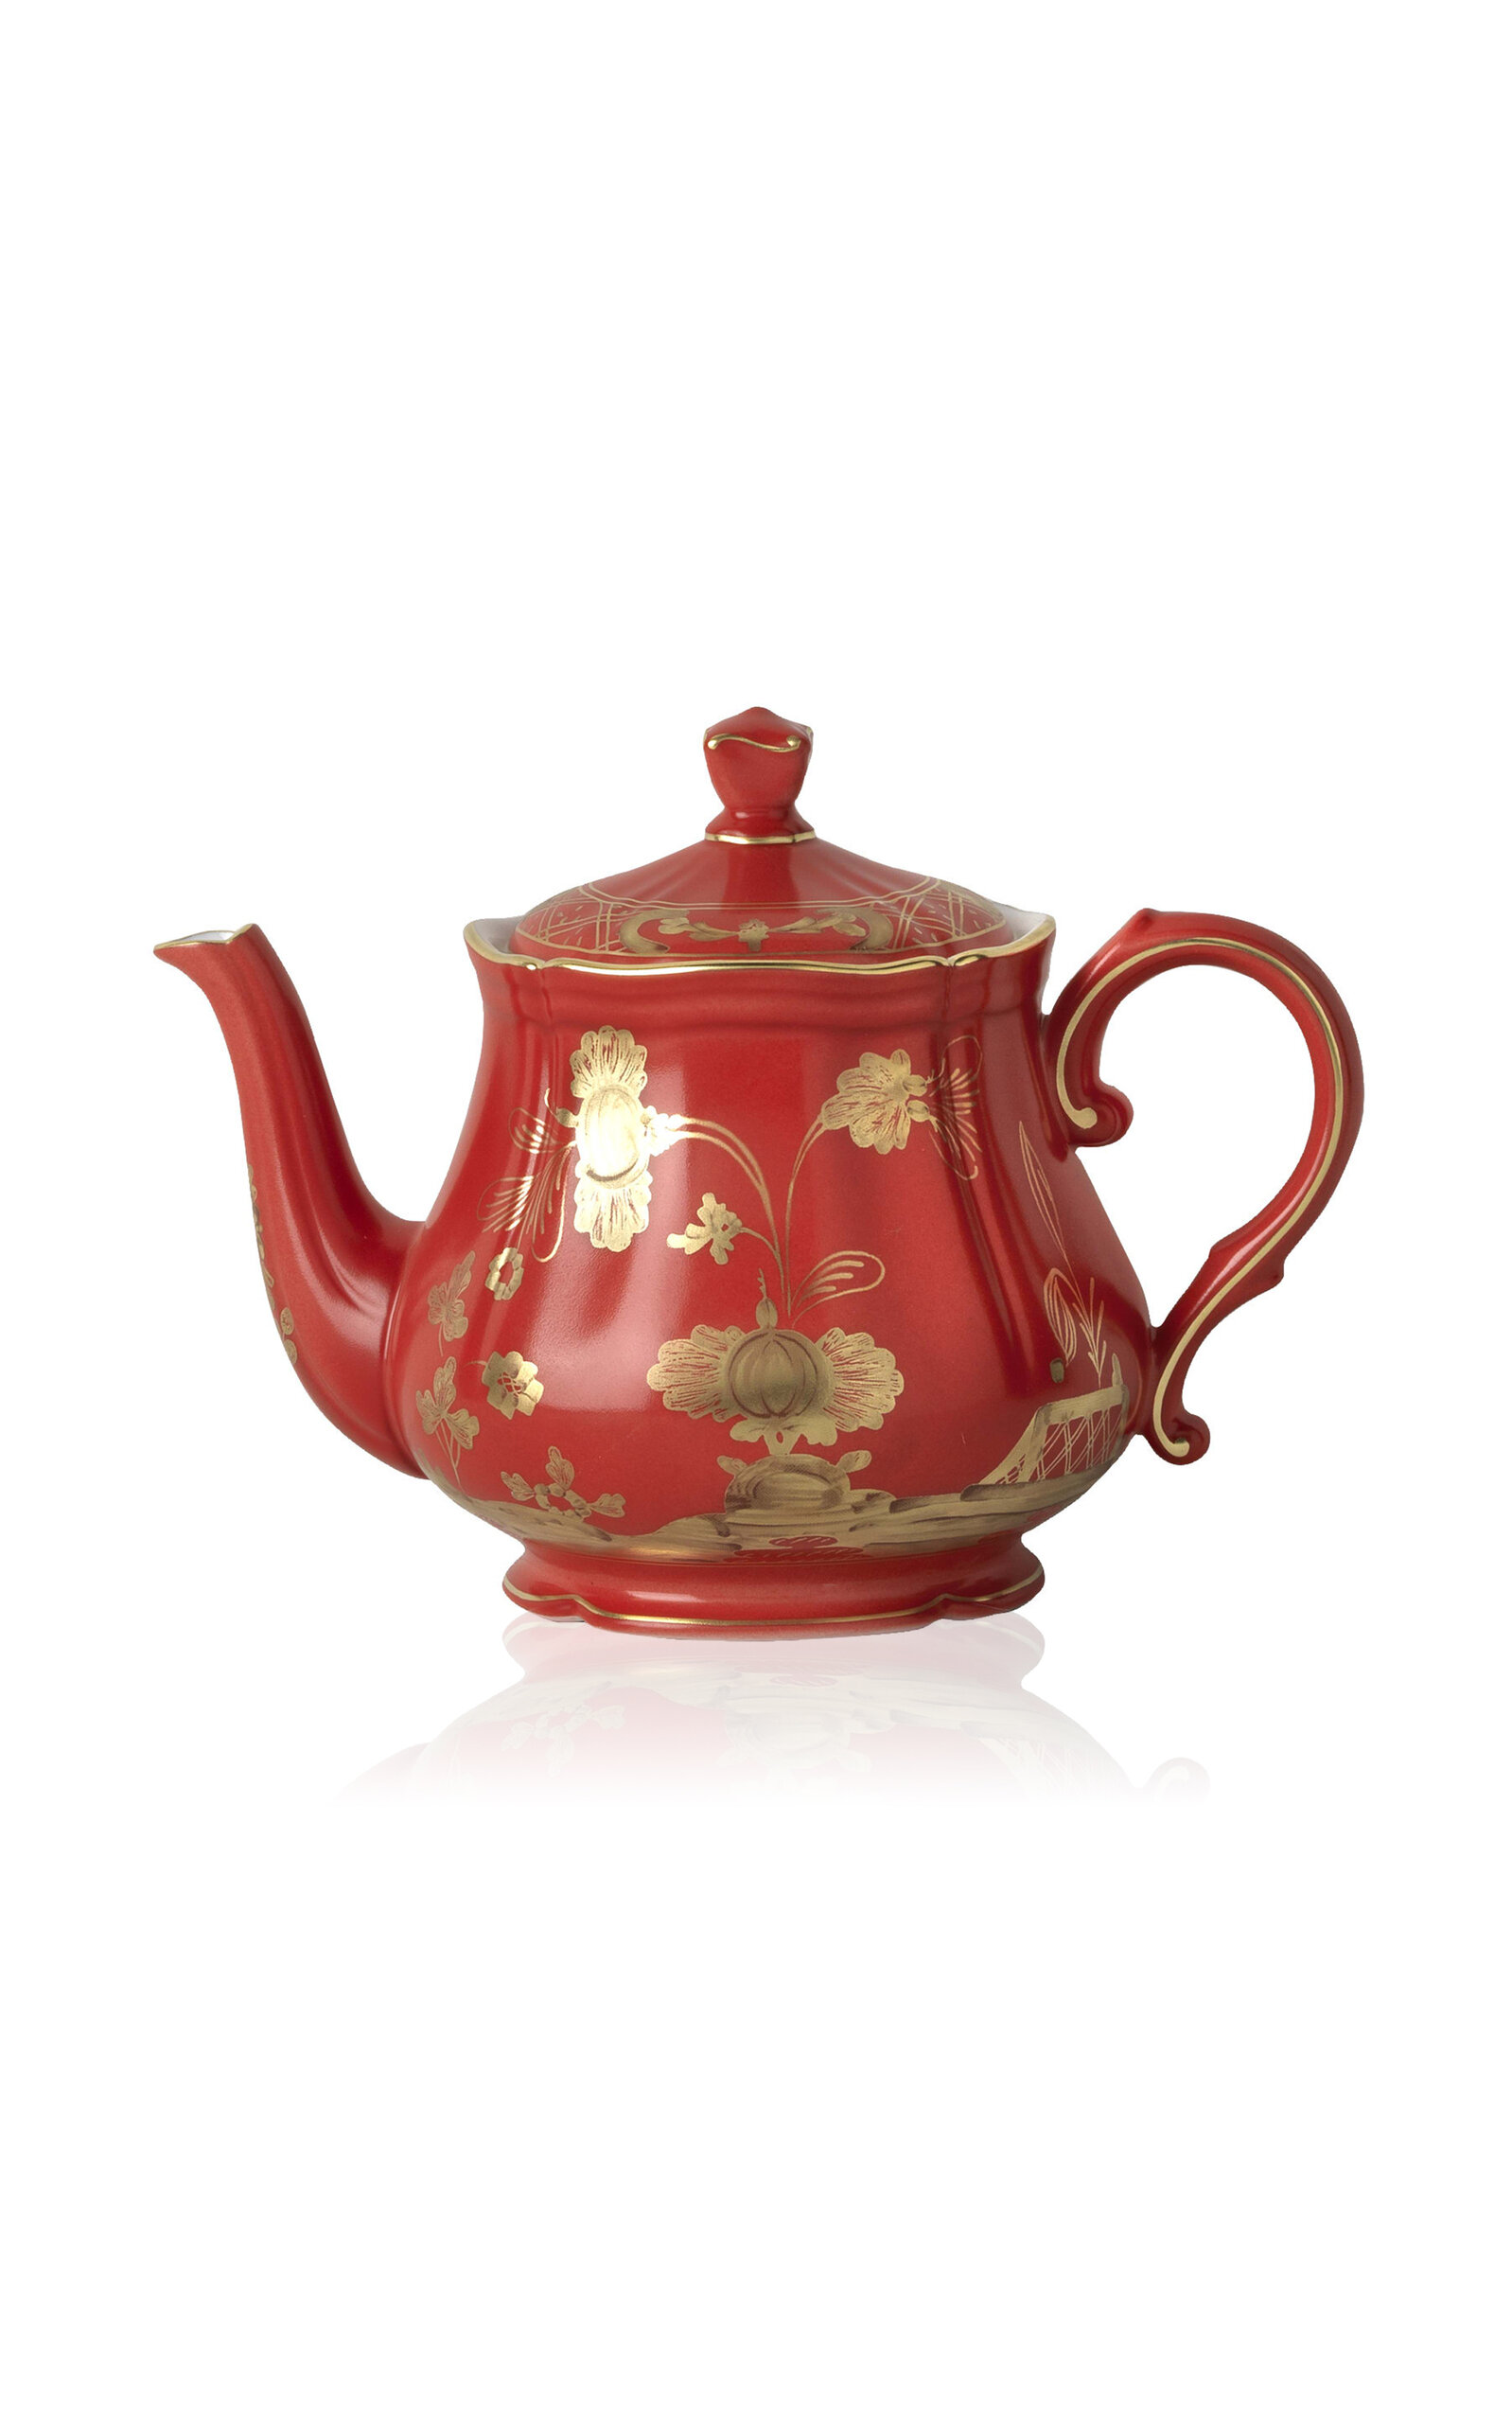 Ginori 1735 Antico Doccia Porcelain Teapot In Red